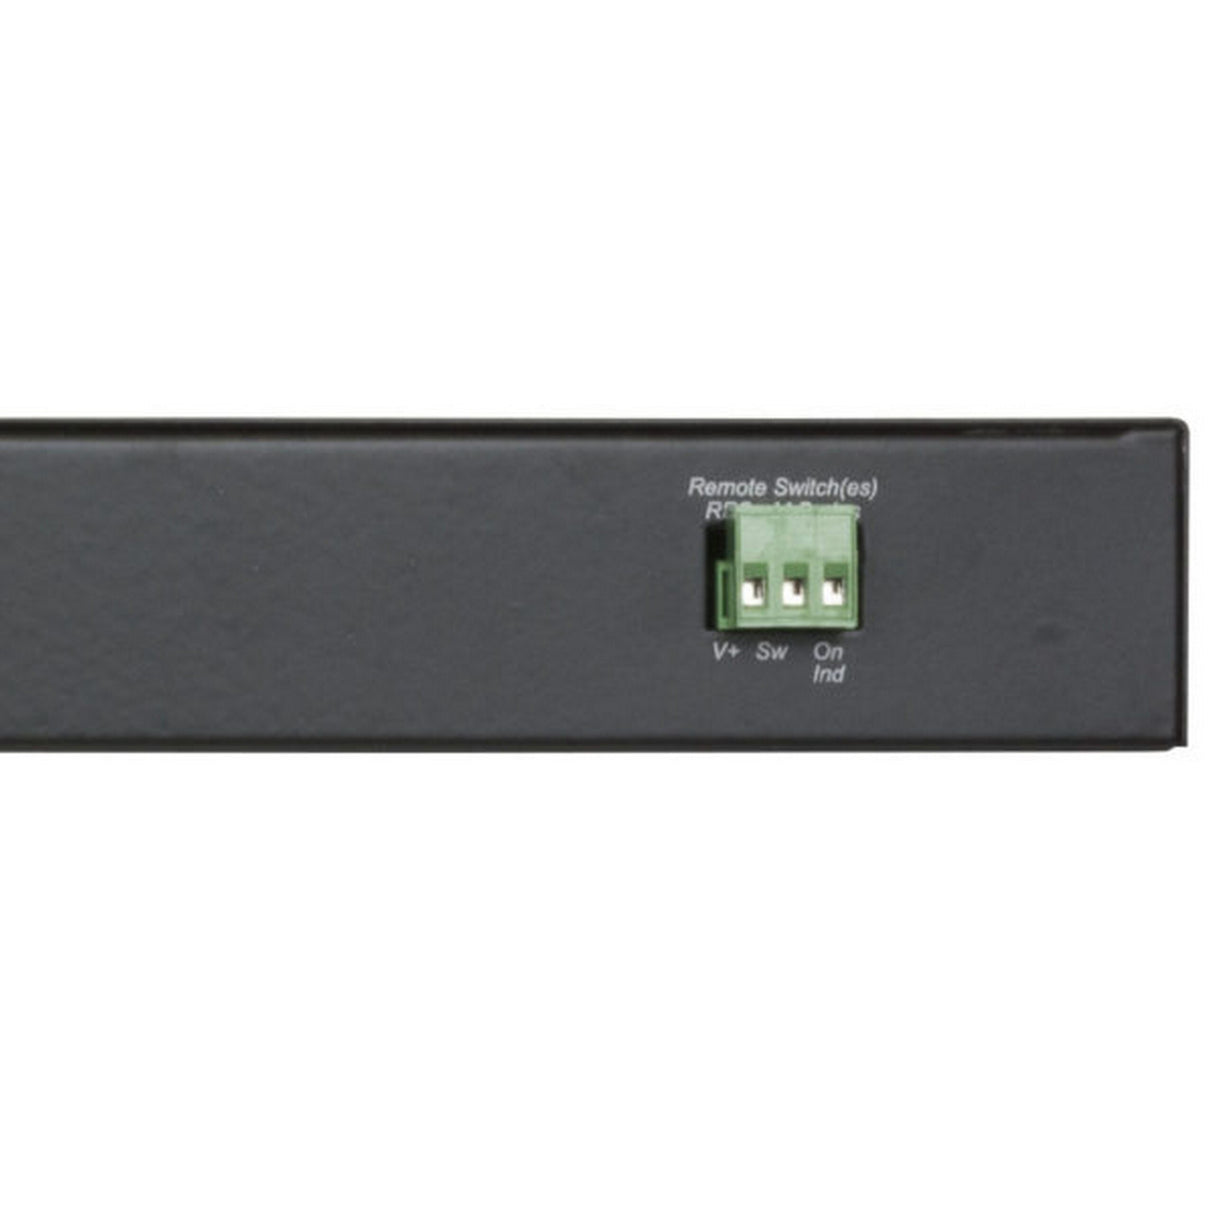 Lowell SEQR-4K Classic Power Sequencer, 4-Step, 1U Rackmount Panel, Key Switch